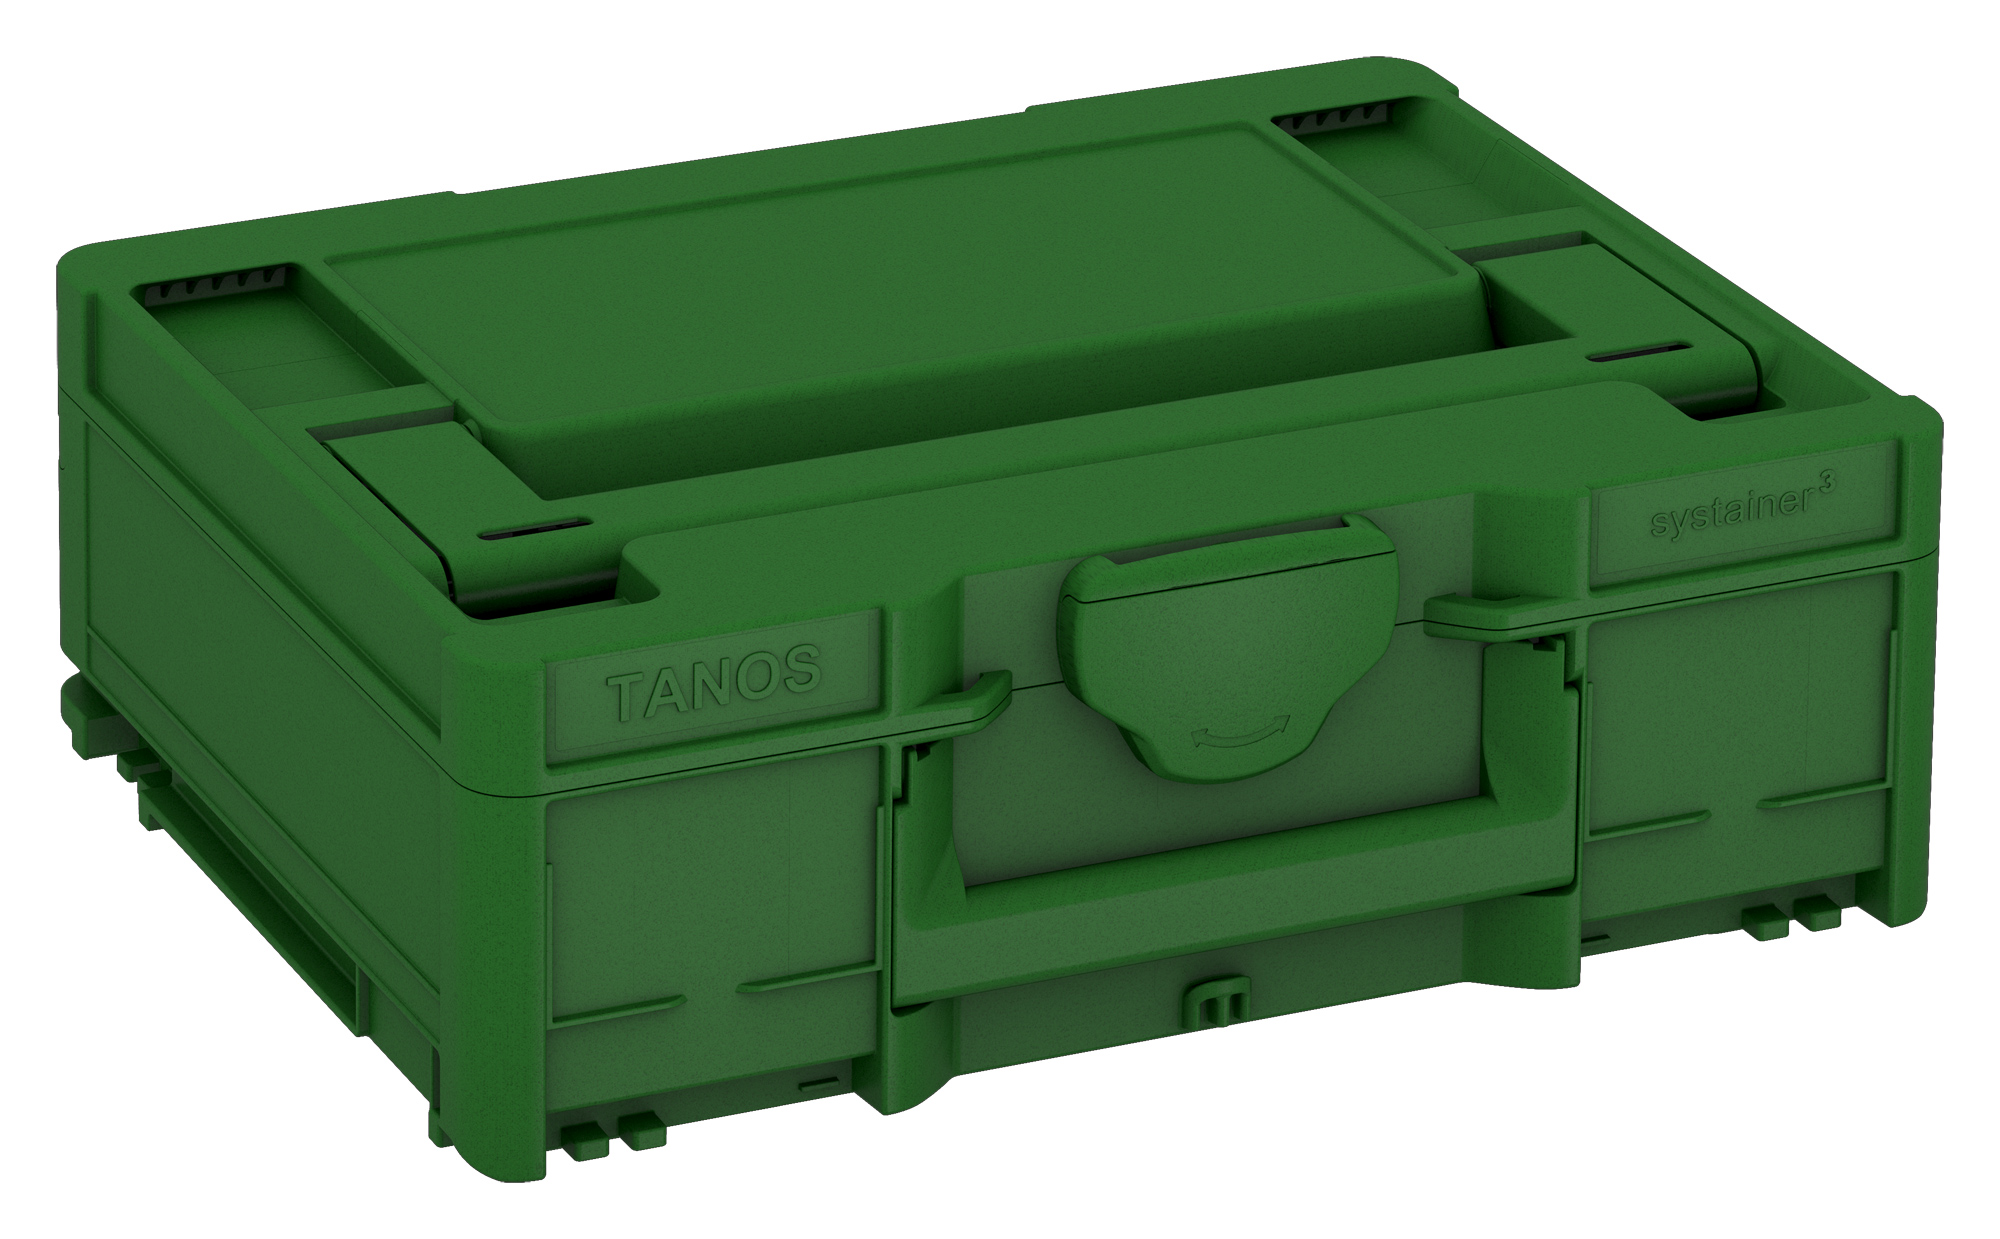 Systainer³ M 137 - Korpus Farbe: Smaragdgrün (RAL 6001) - Griff Farbe: Smaragdgrün (RAL 6001) - Verschluss Farbe: Smaragdgrün (RAL 6001)